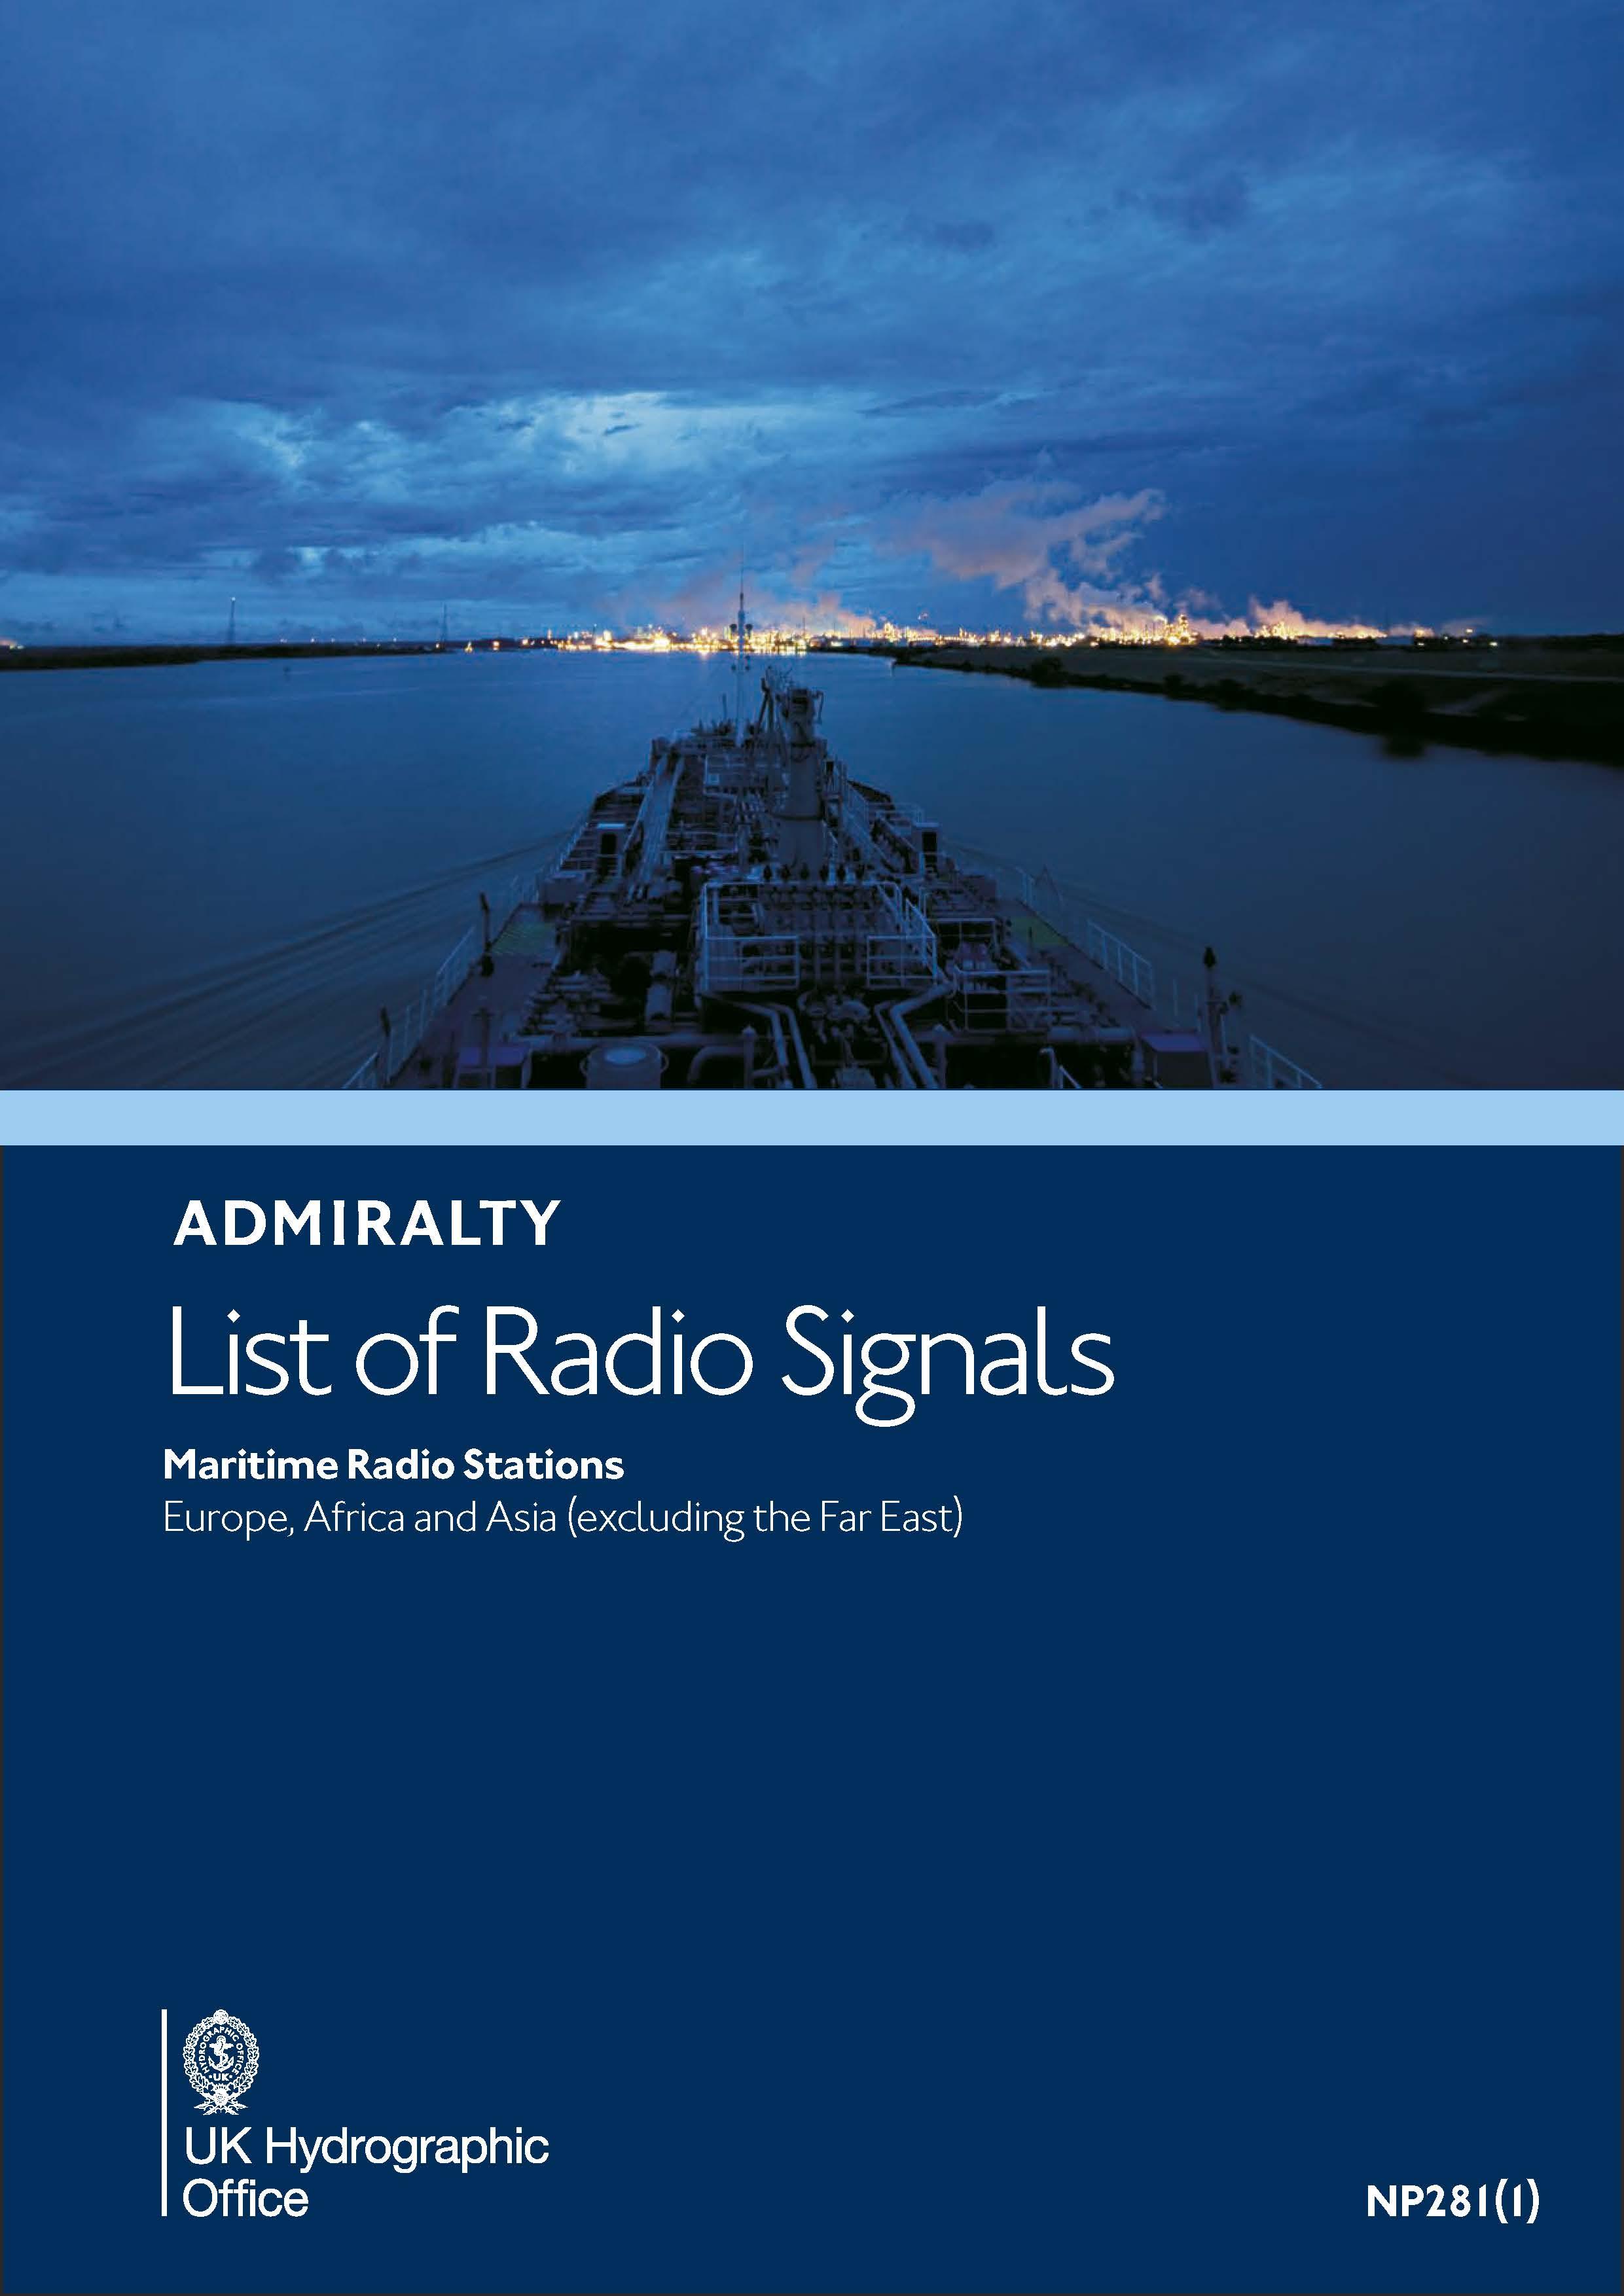 ADMIRALTY NP281(1) RadioSignals - Maritime Radio Stations - EMEA